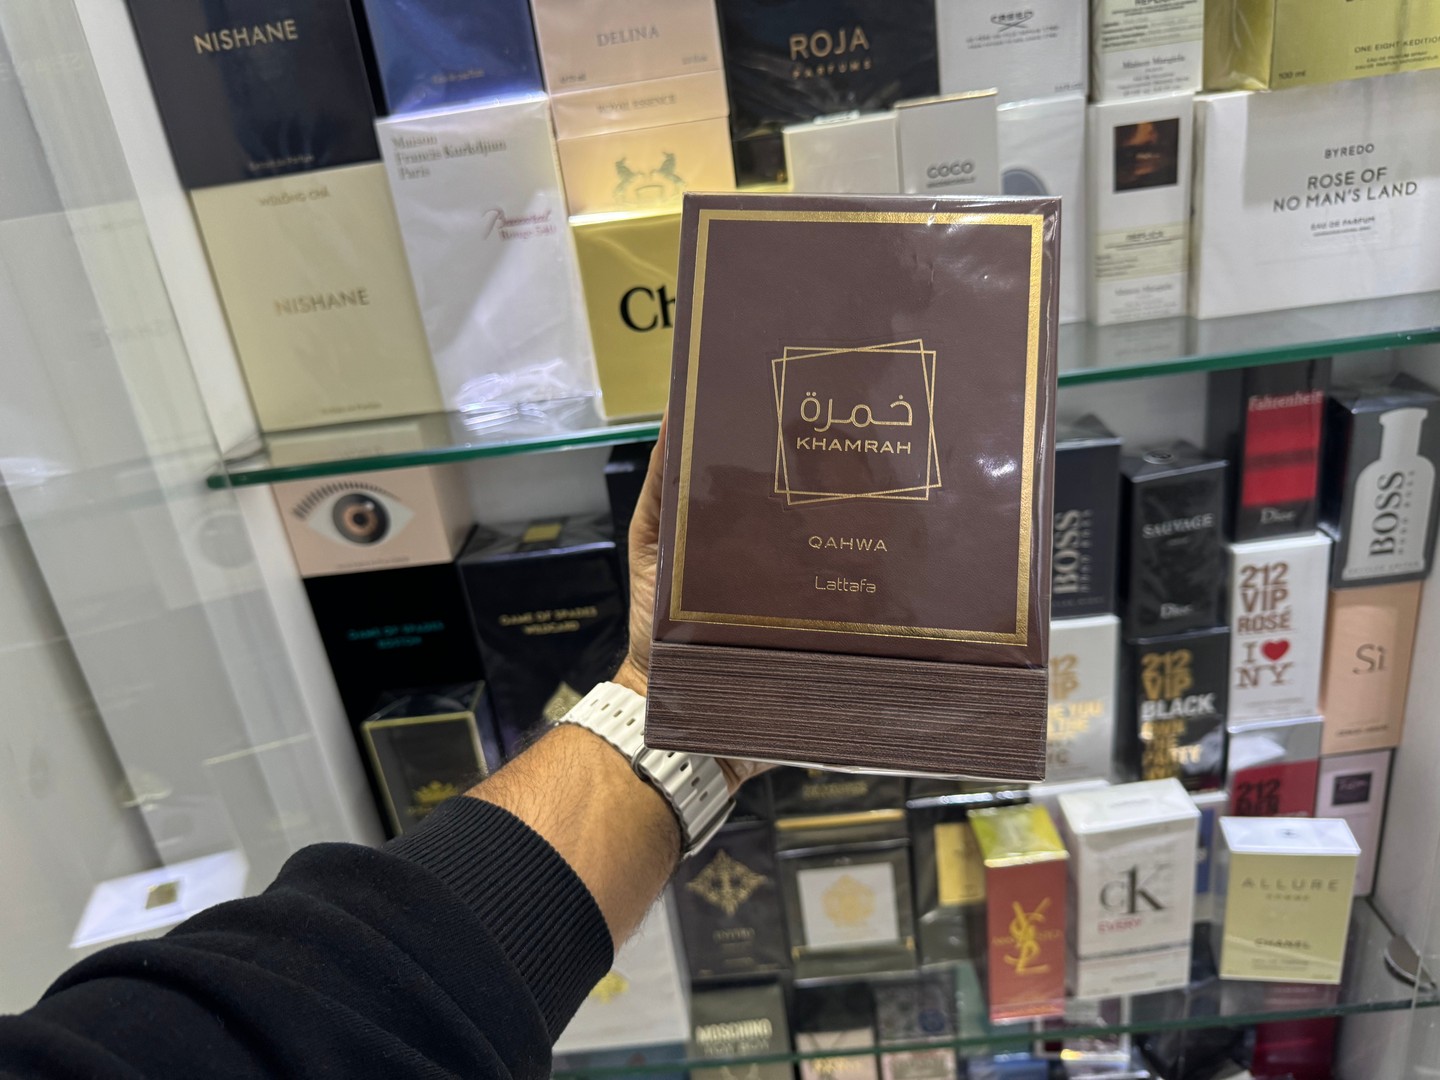 joyas, relojes y accesorios - Perfume KHAMRAH QAHWA Lattafa 100ML o 3.4OZFL Nuevo, Original , RD$ 4,800 NEG